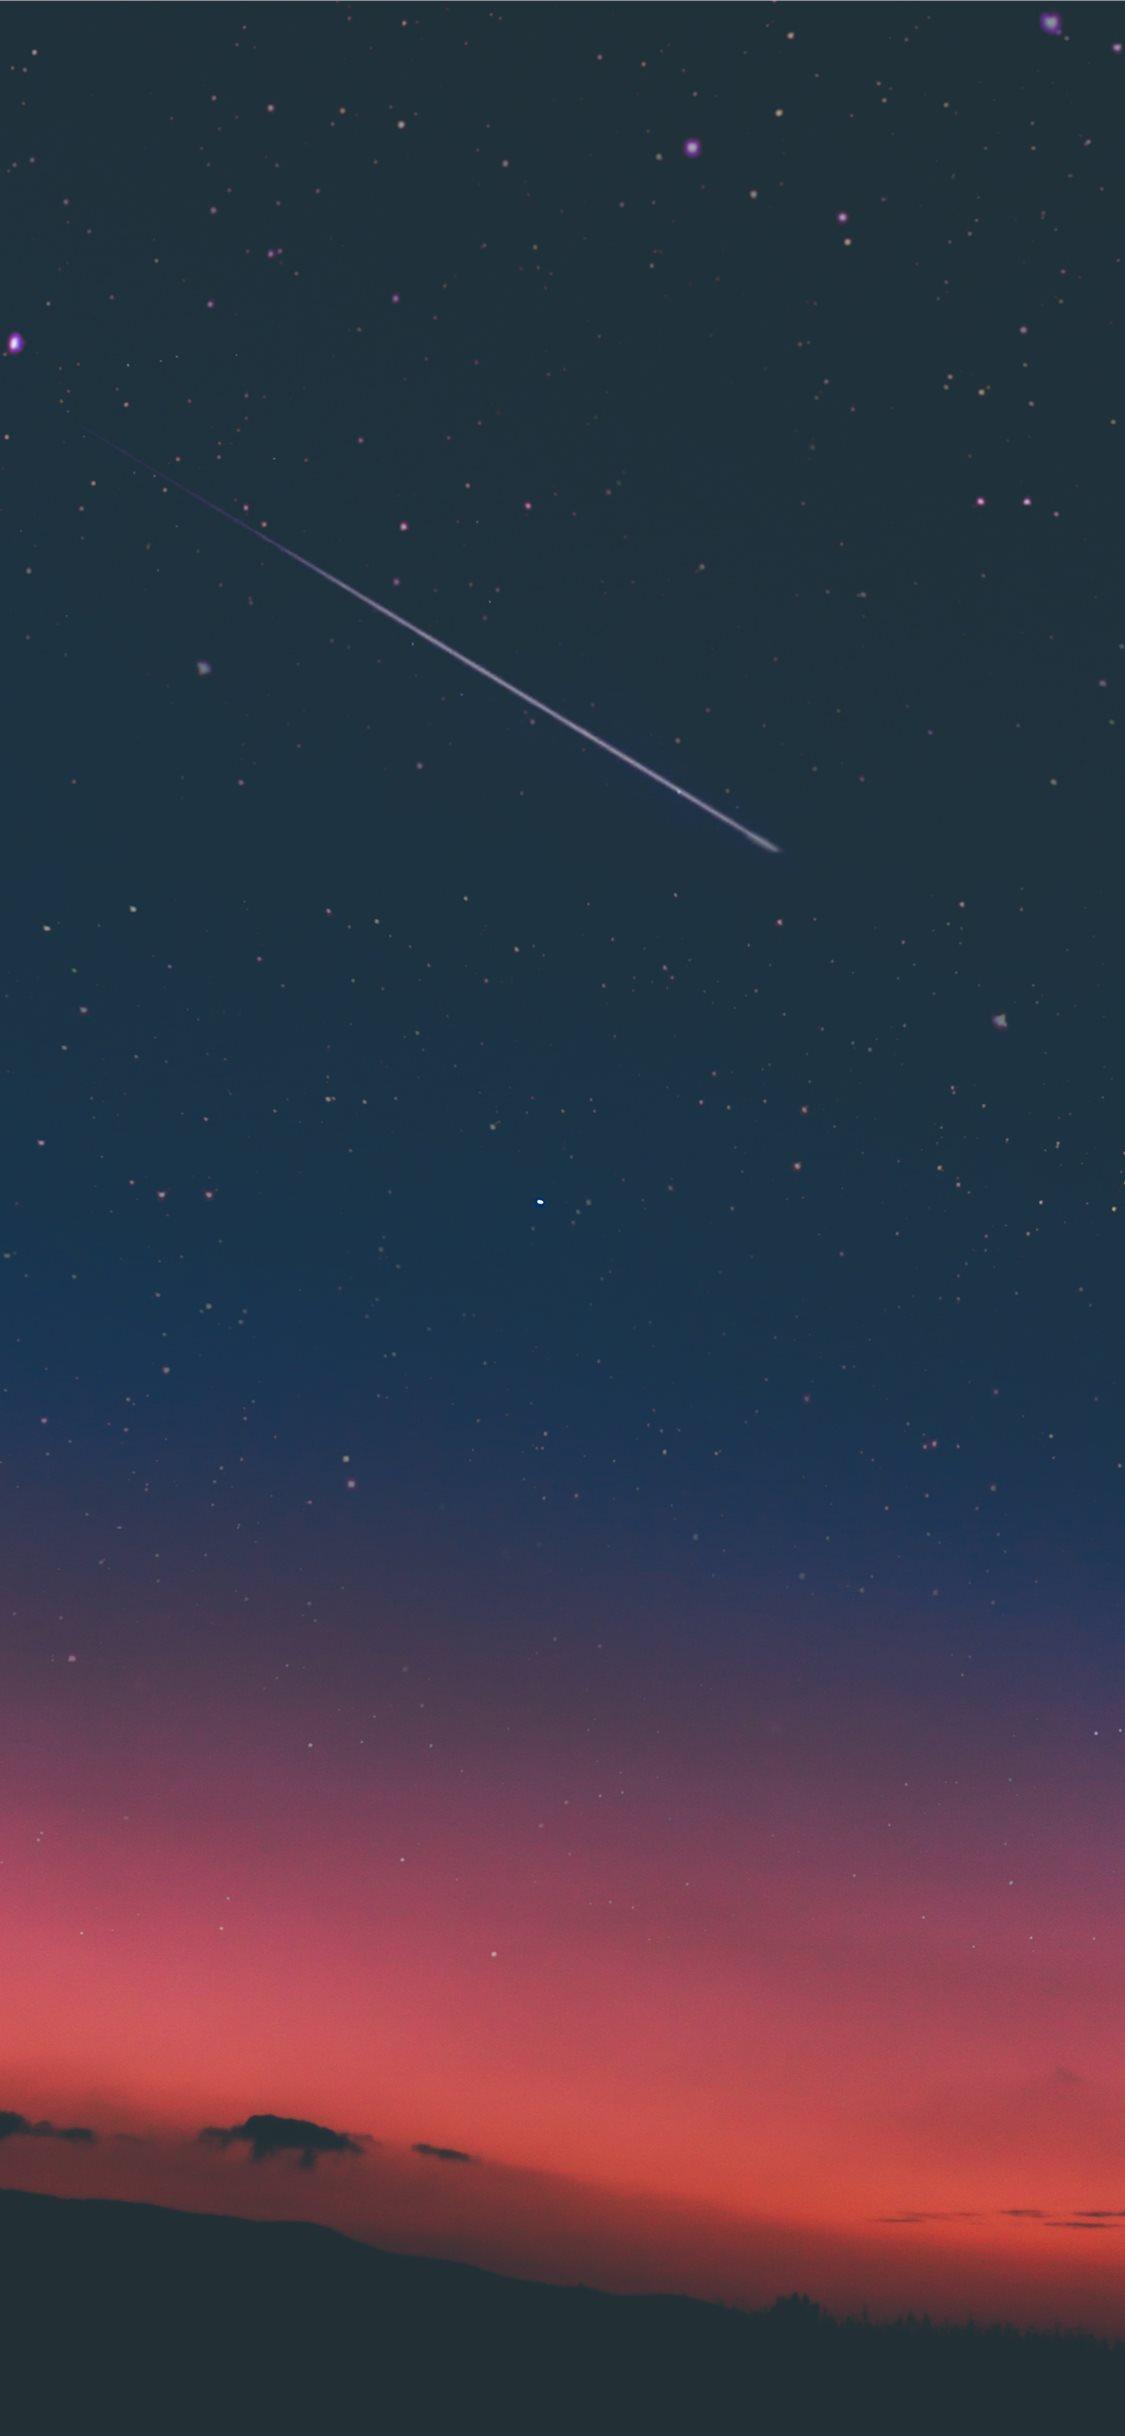 shooting star in night sky iPhone 11 Wallpaper Free Download